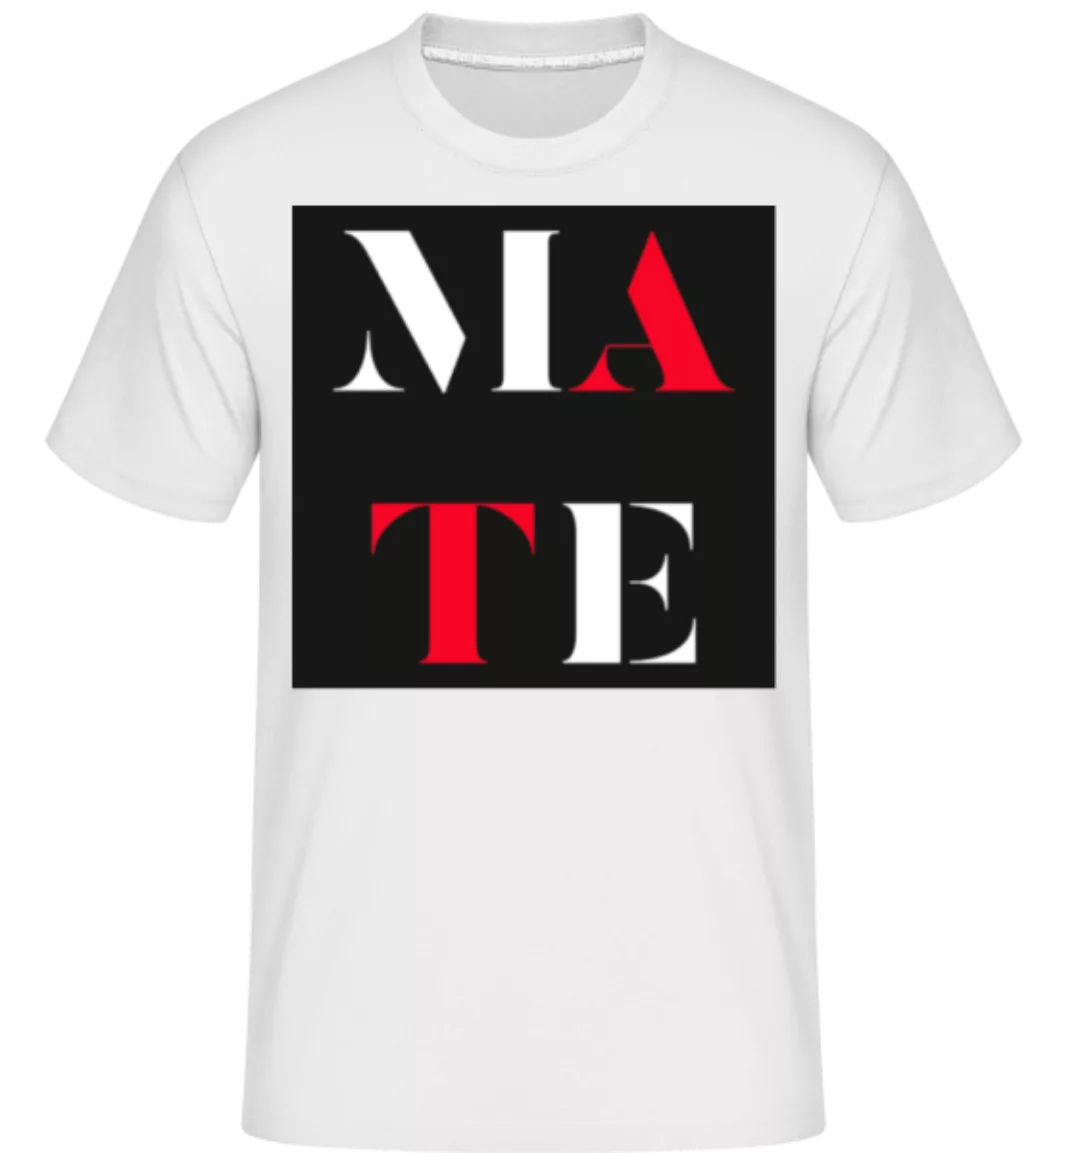 Soul Mate 2 · Shirtinator Männer T-Shirt günstig online kaufen